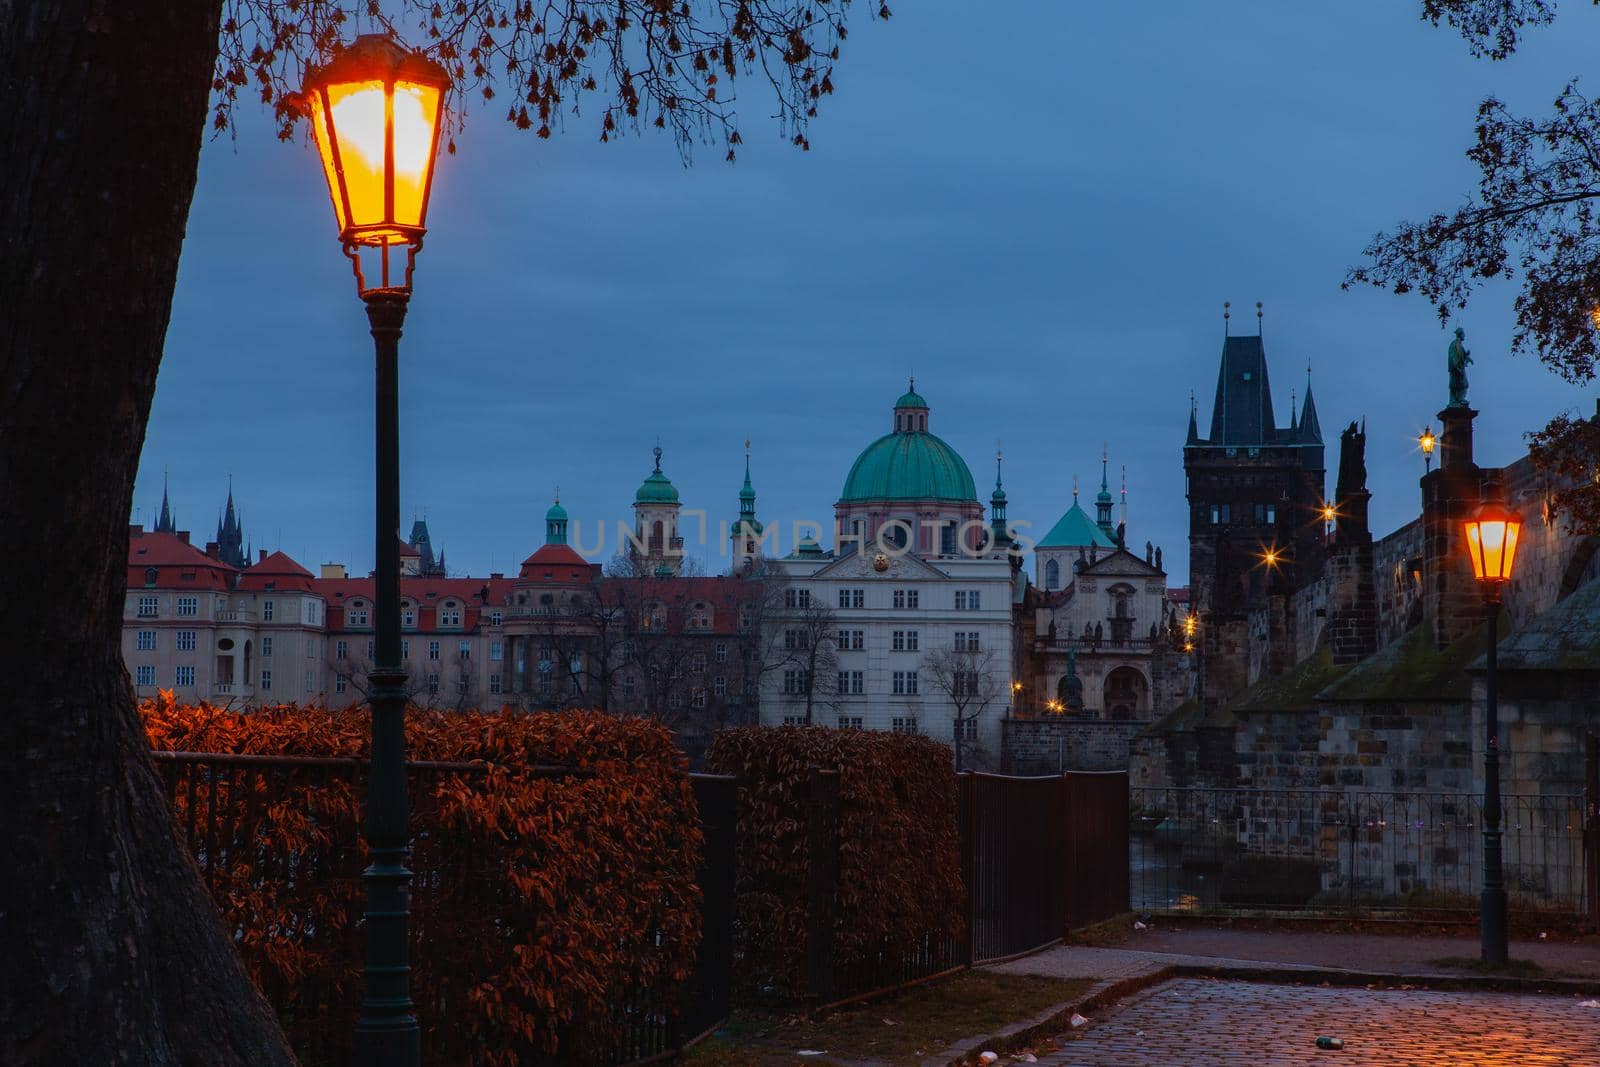 Evening scenery next to Charles bridge, Prague, Czech Republic.  by CaptureLight